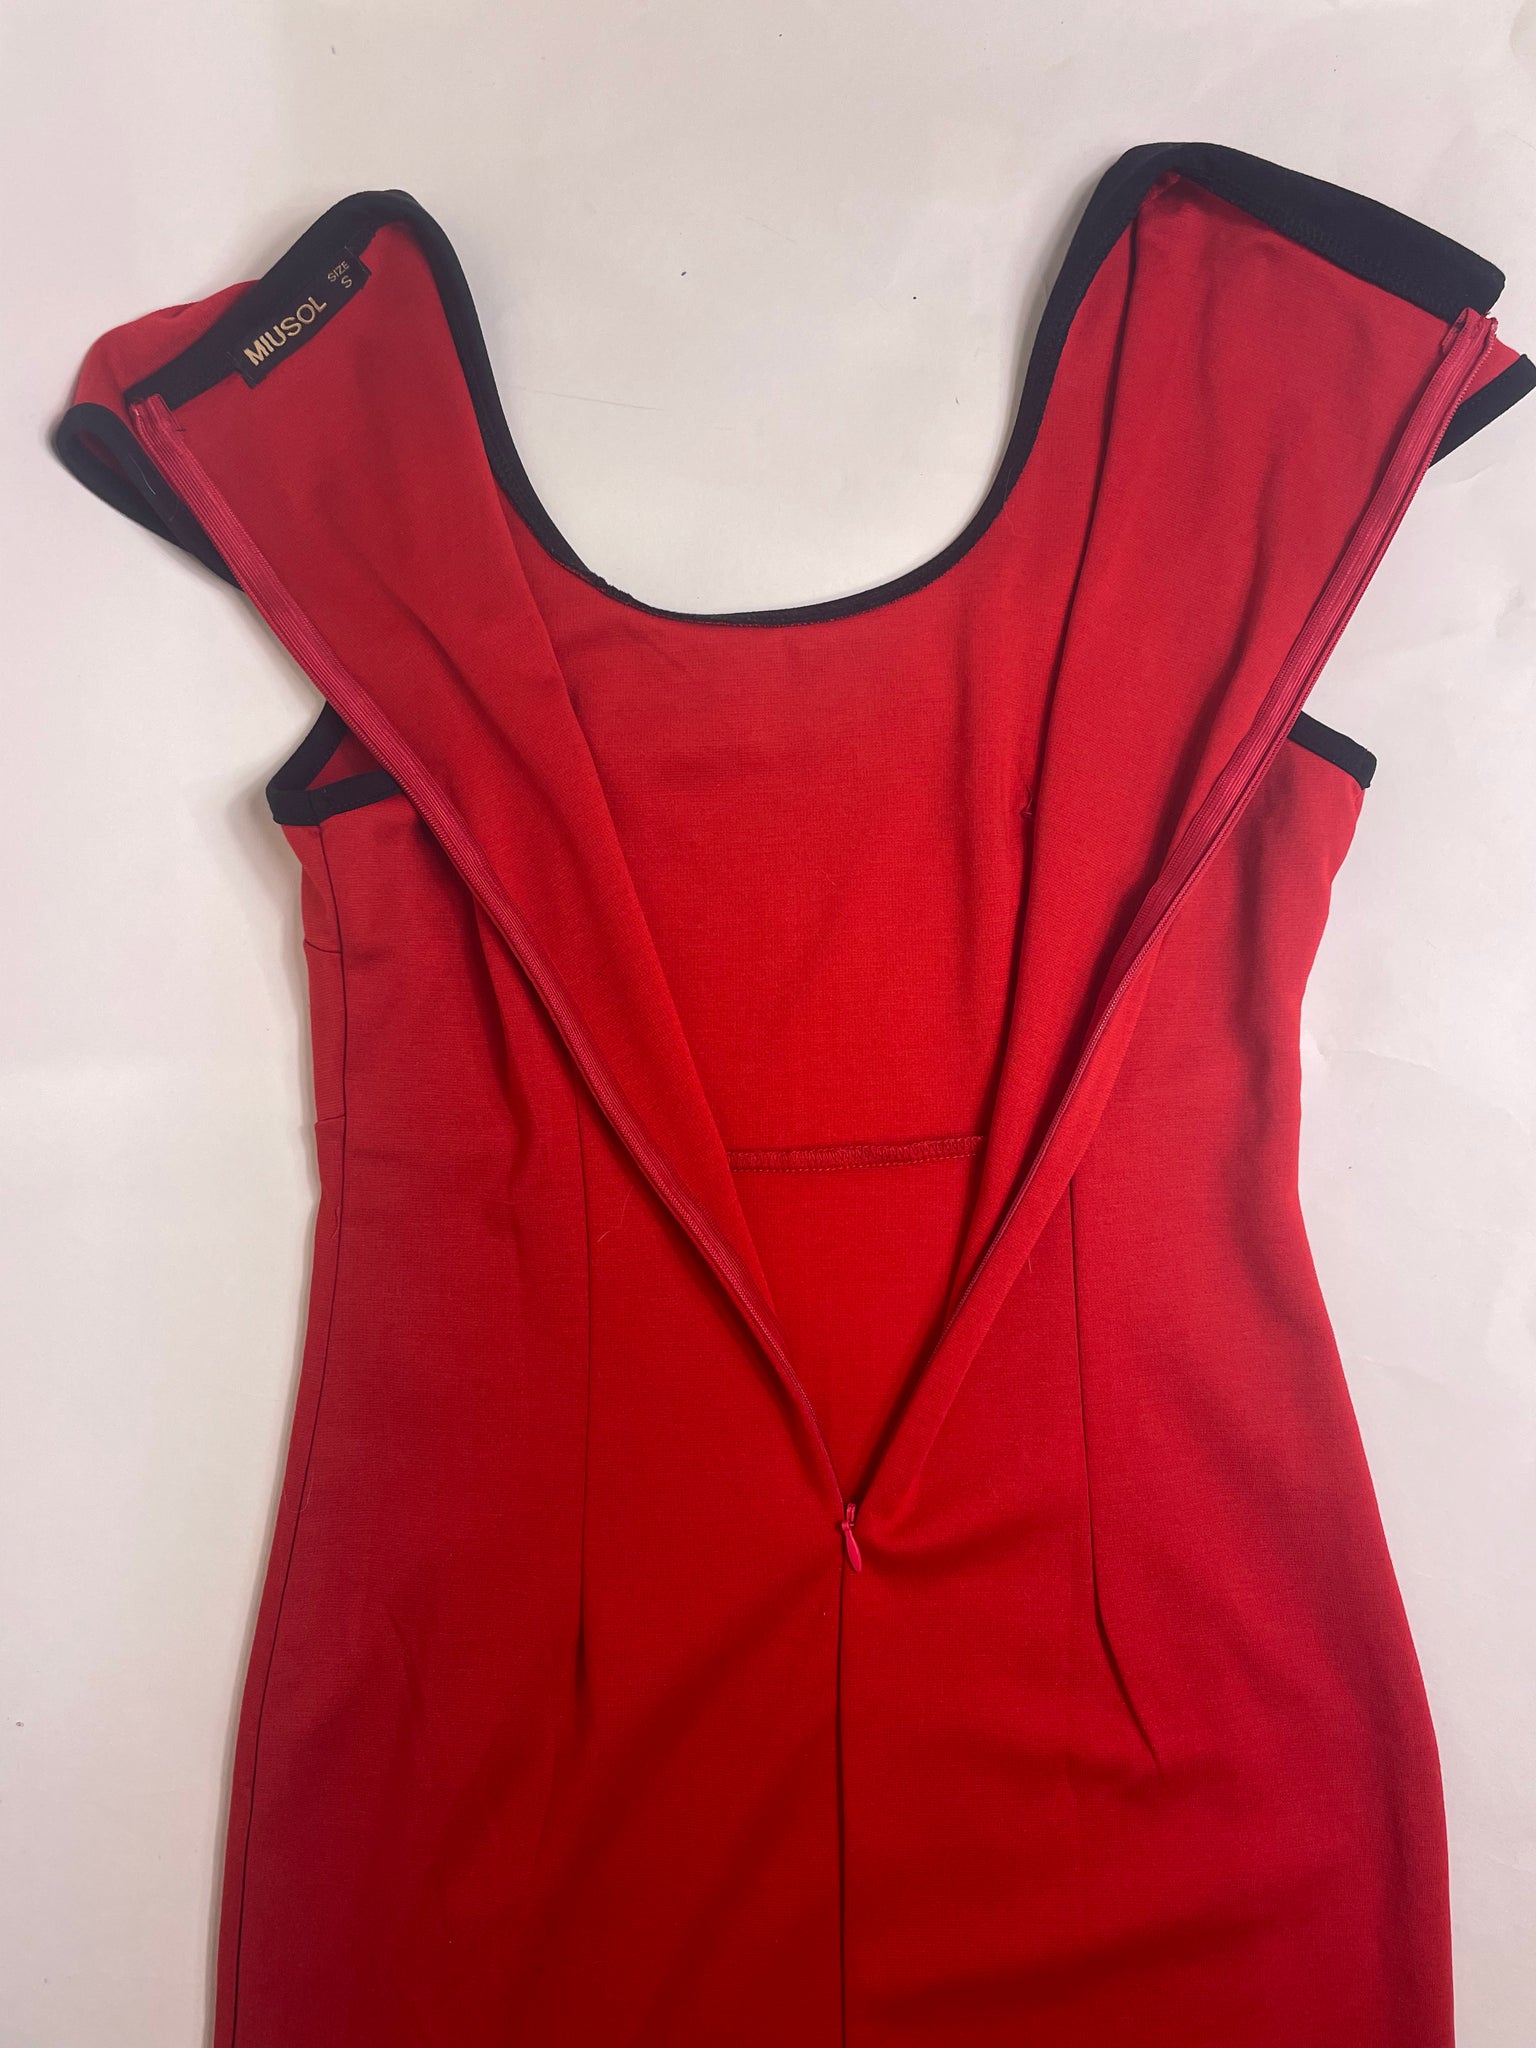 Retro red peplum dress, Size S